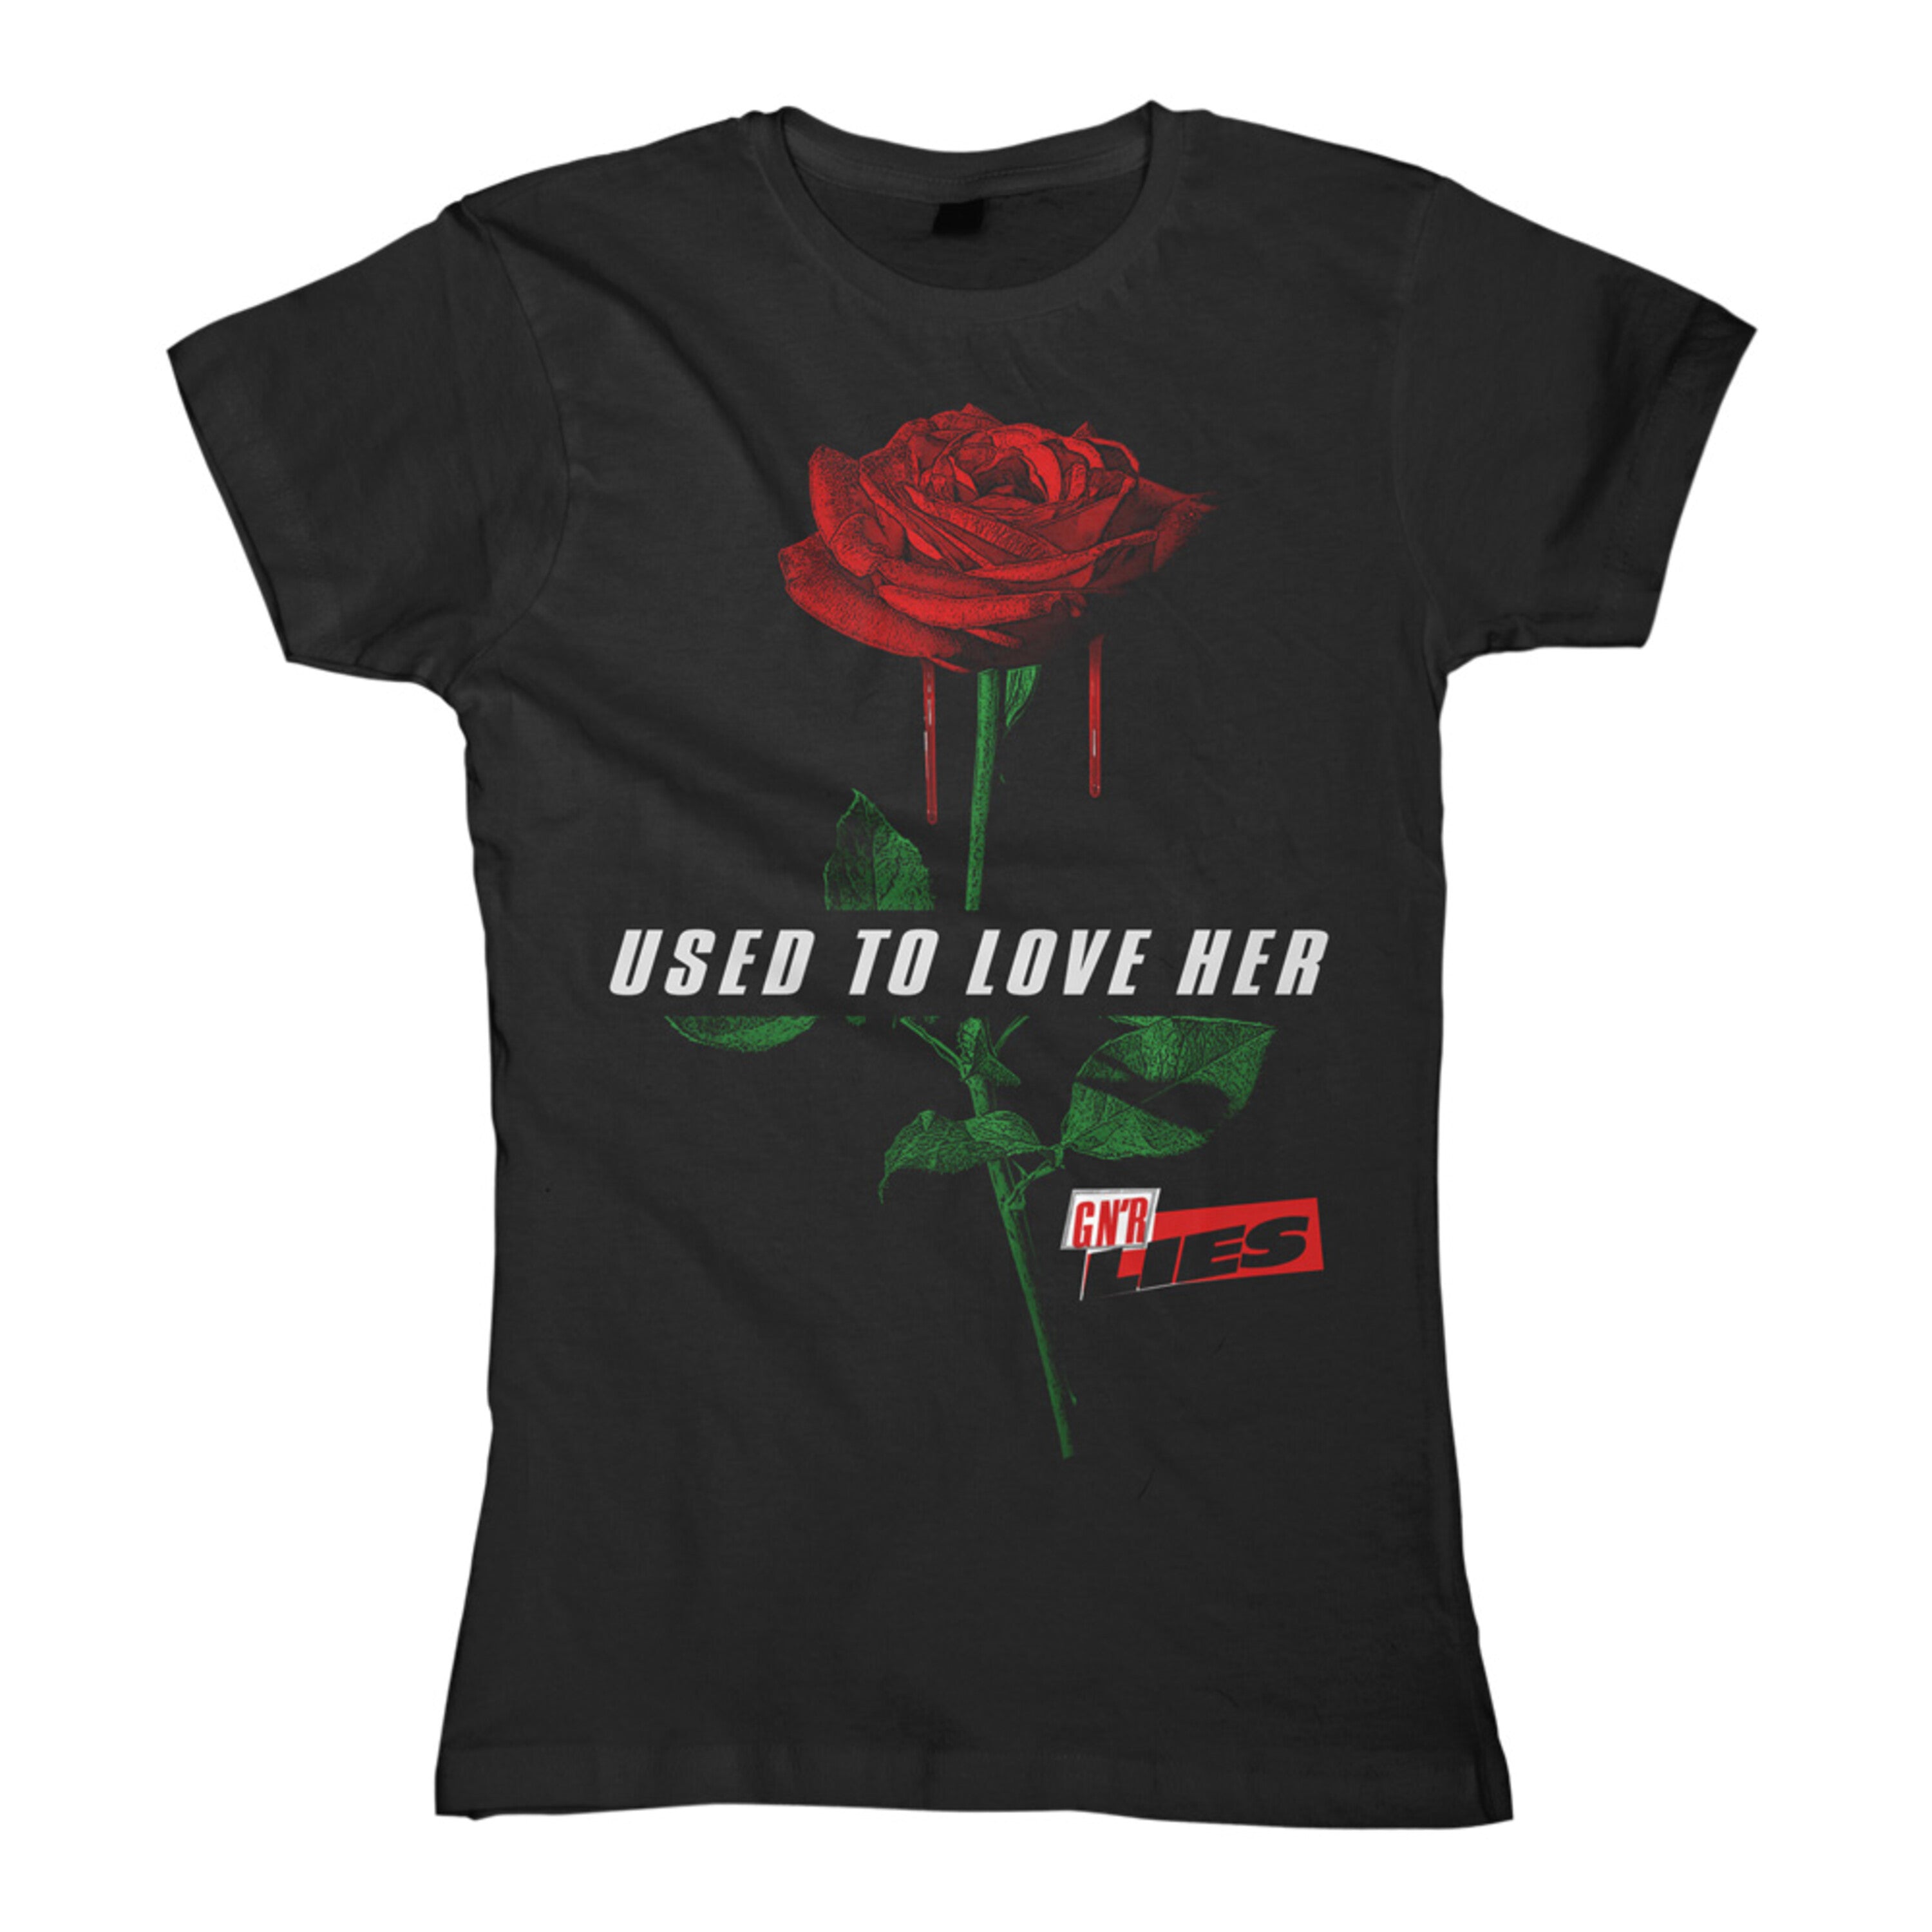 https://images.bravado.de/prod/product-assets/product-asset-data/guns-n-roses/guns-n-roses/products/129171/web/289534/image-thumb__289534__3000x3000_original/Guns-N-Roses-Used-To-Love-Her-Girlie-Shirt-schwarz-129171-289534.jpg